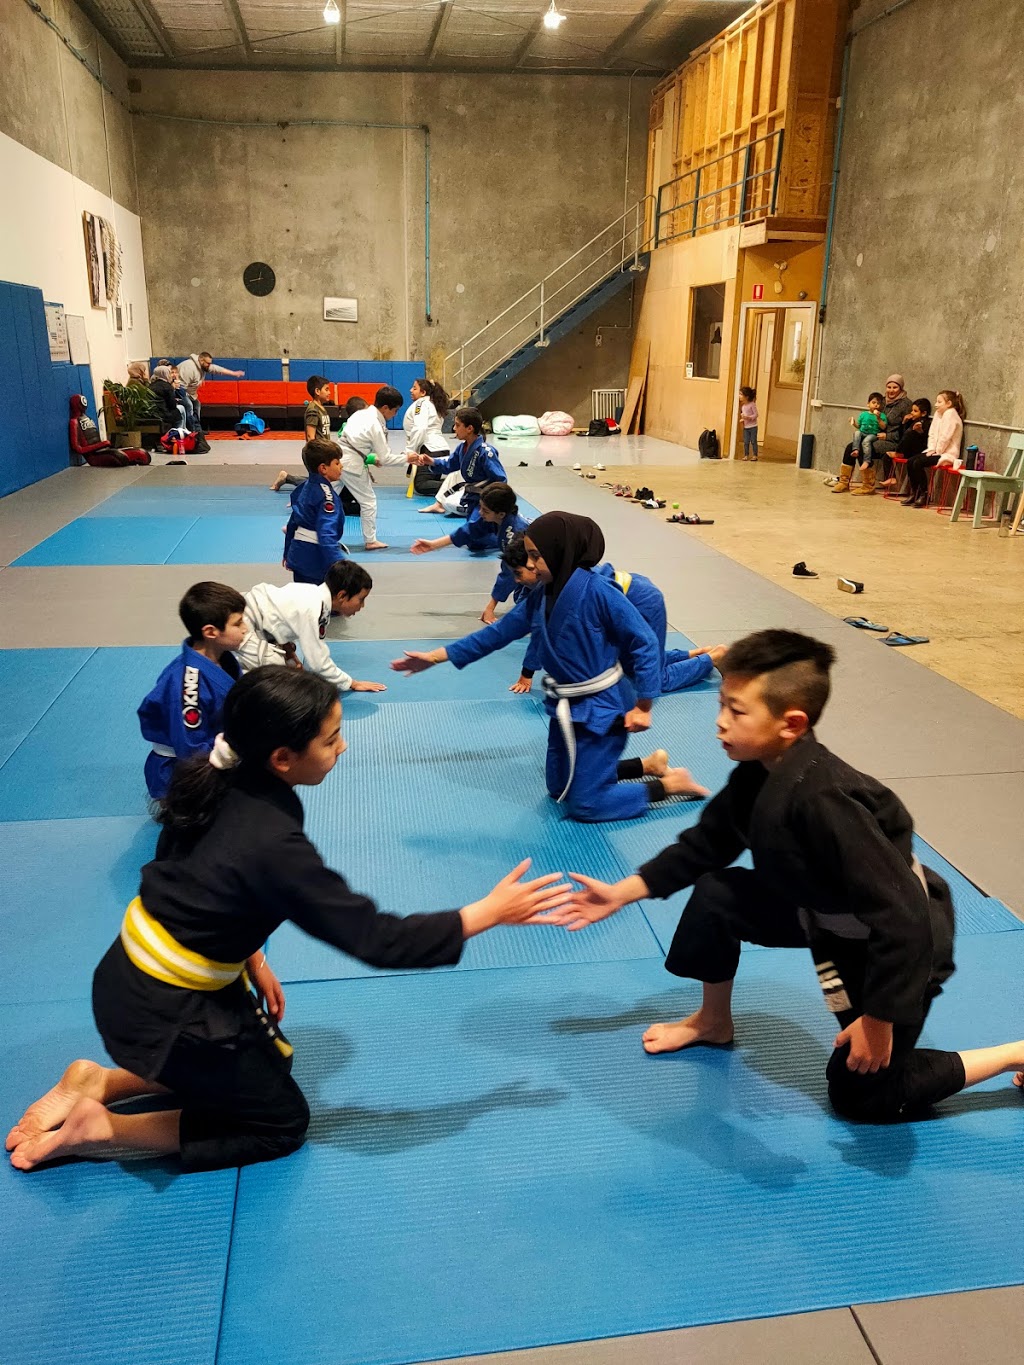 Control Jiu jitsu academy | health | 2/4 Nevada Ct, Hoppers Crossing VIC 3029, Australia | 0435691999 OR +61 435 691 999